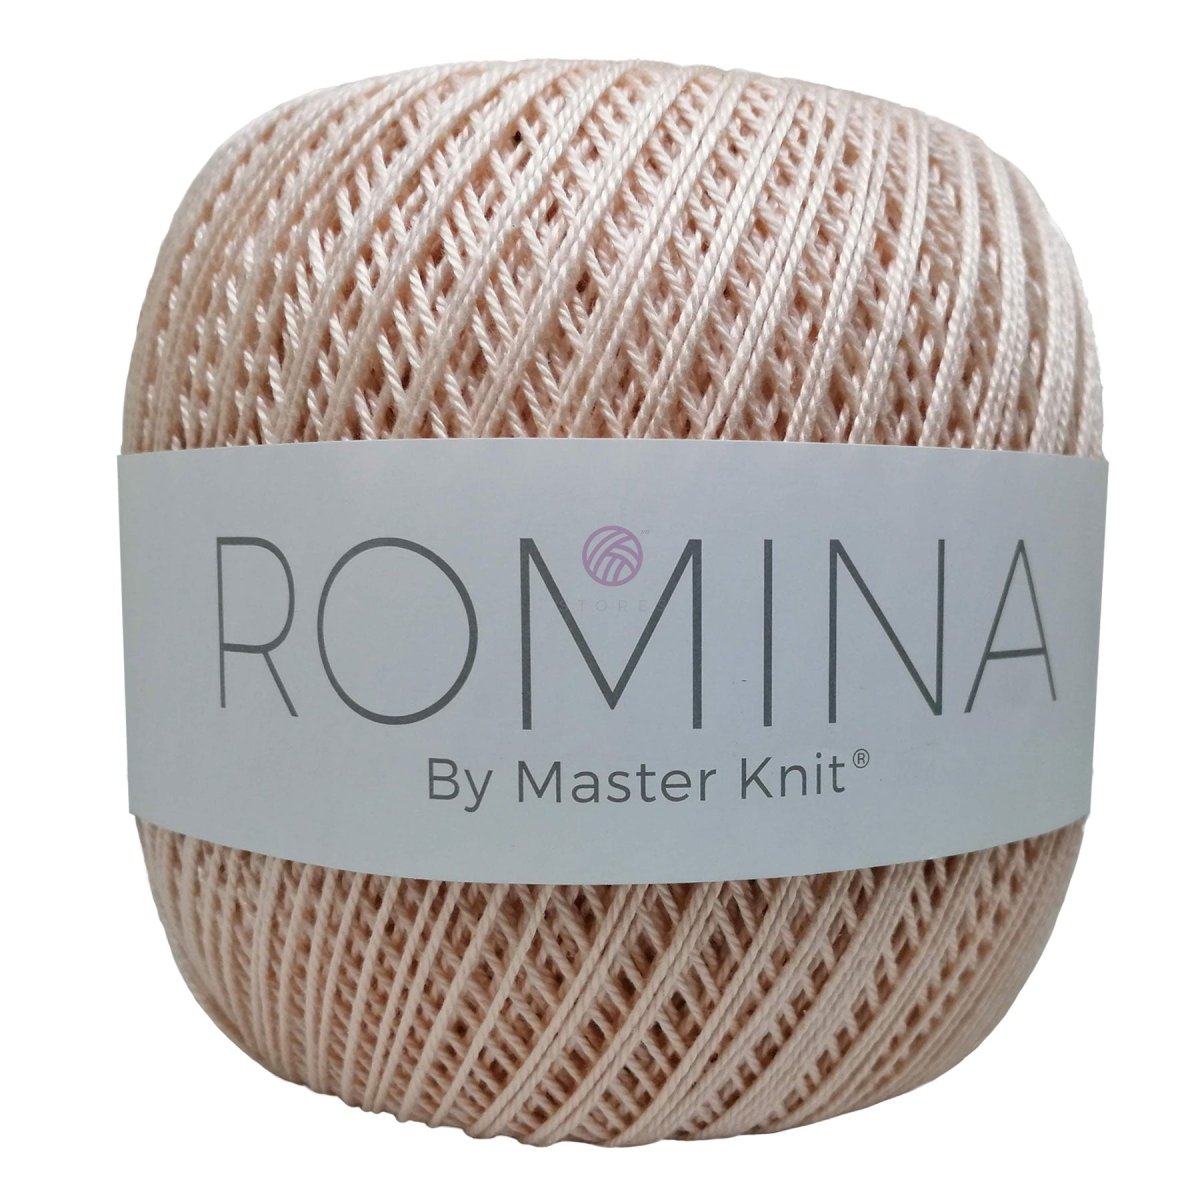 ROMINA - Crochetstores9335-407745051438647